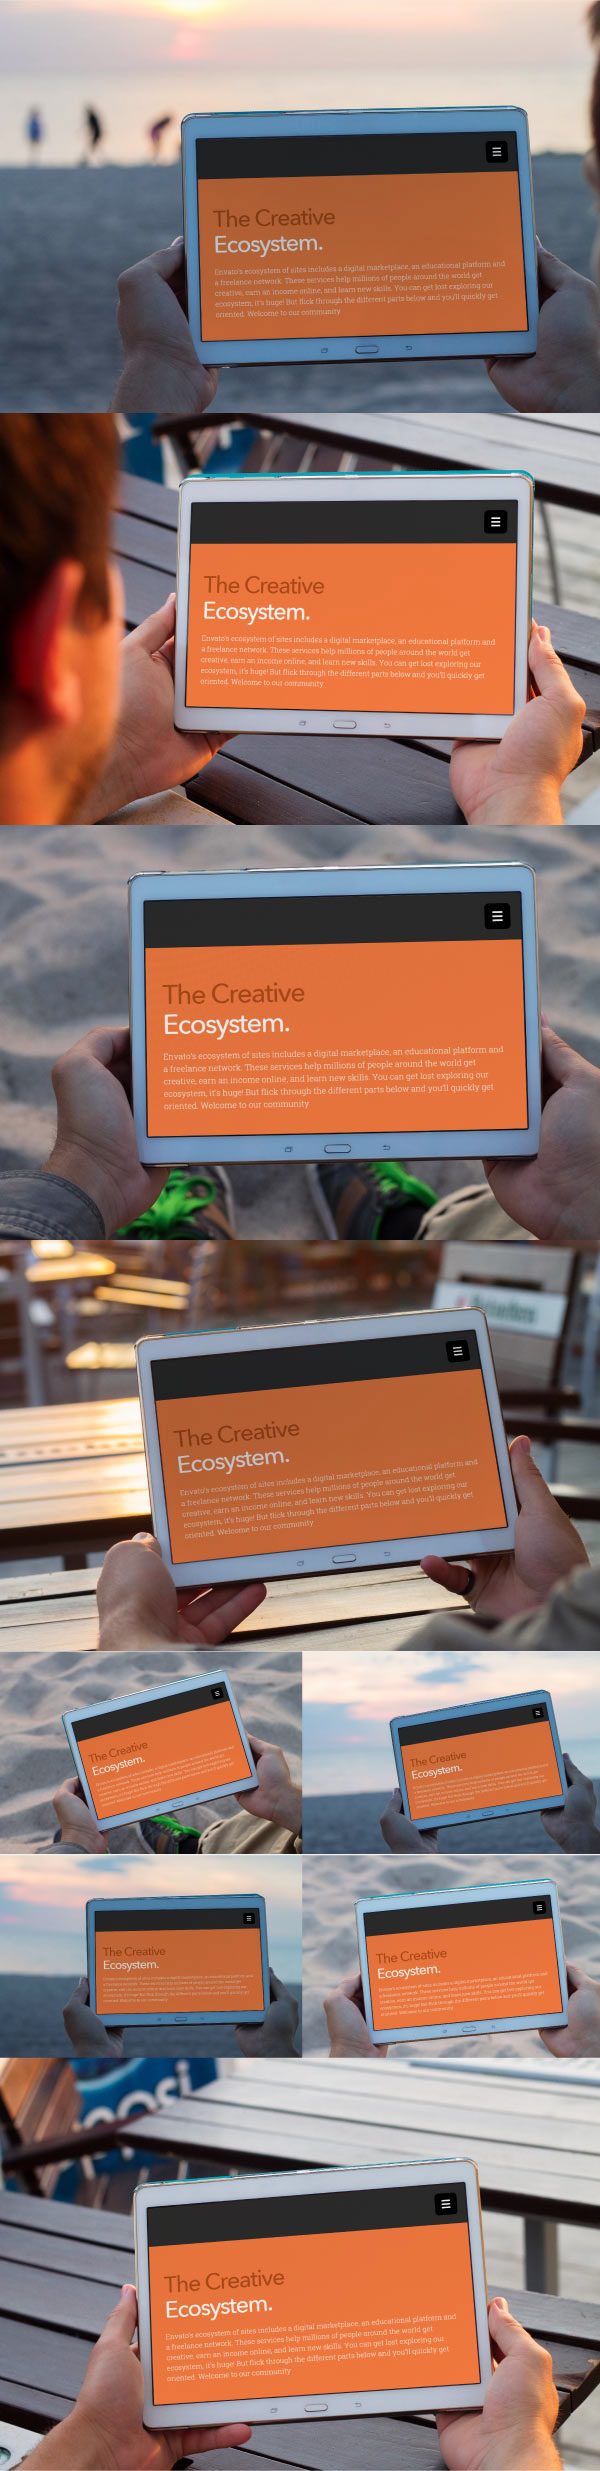 app beach design Display galaxy holidays horizontal Landscape mobile mock Mockup mockups Outdoor people photo